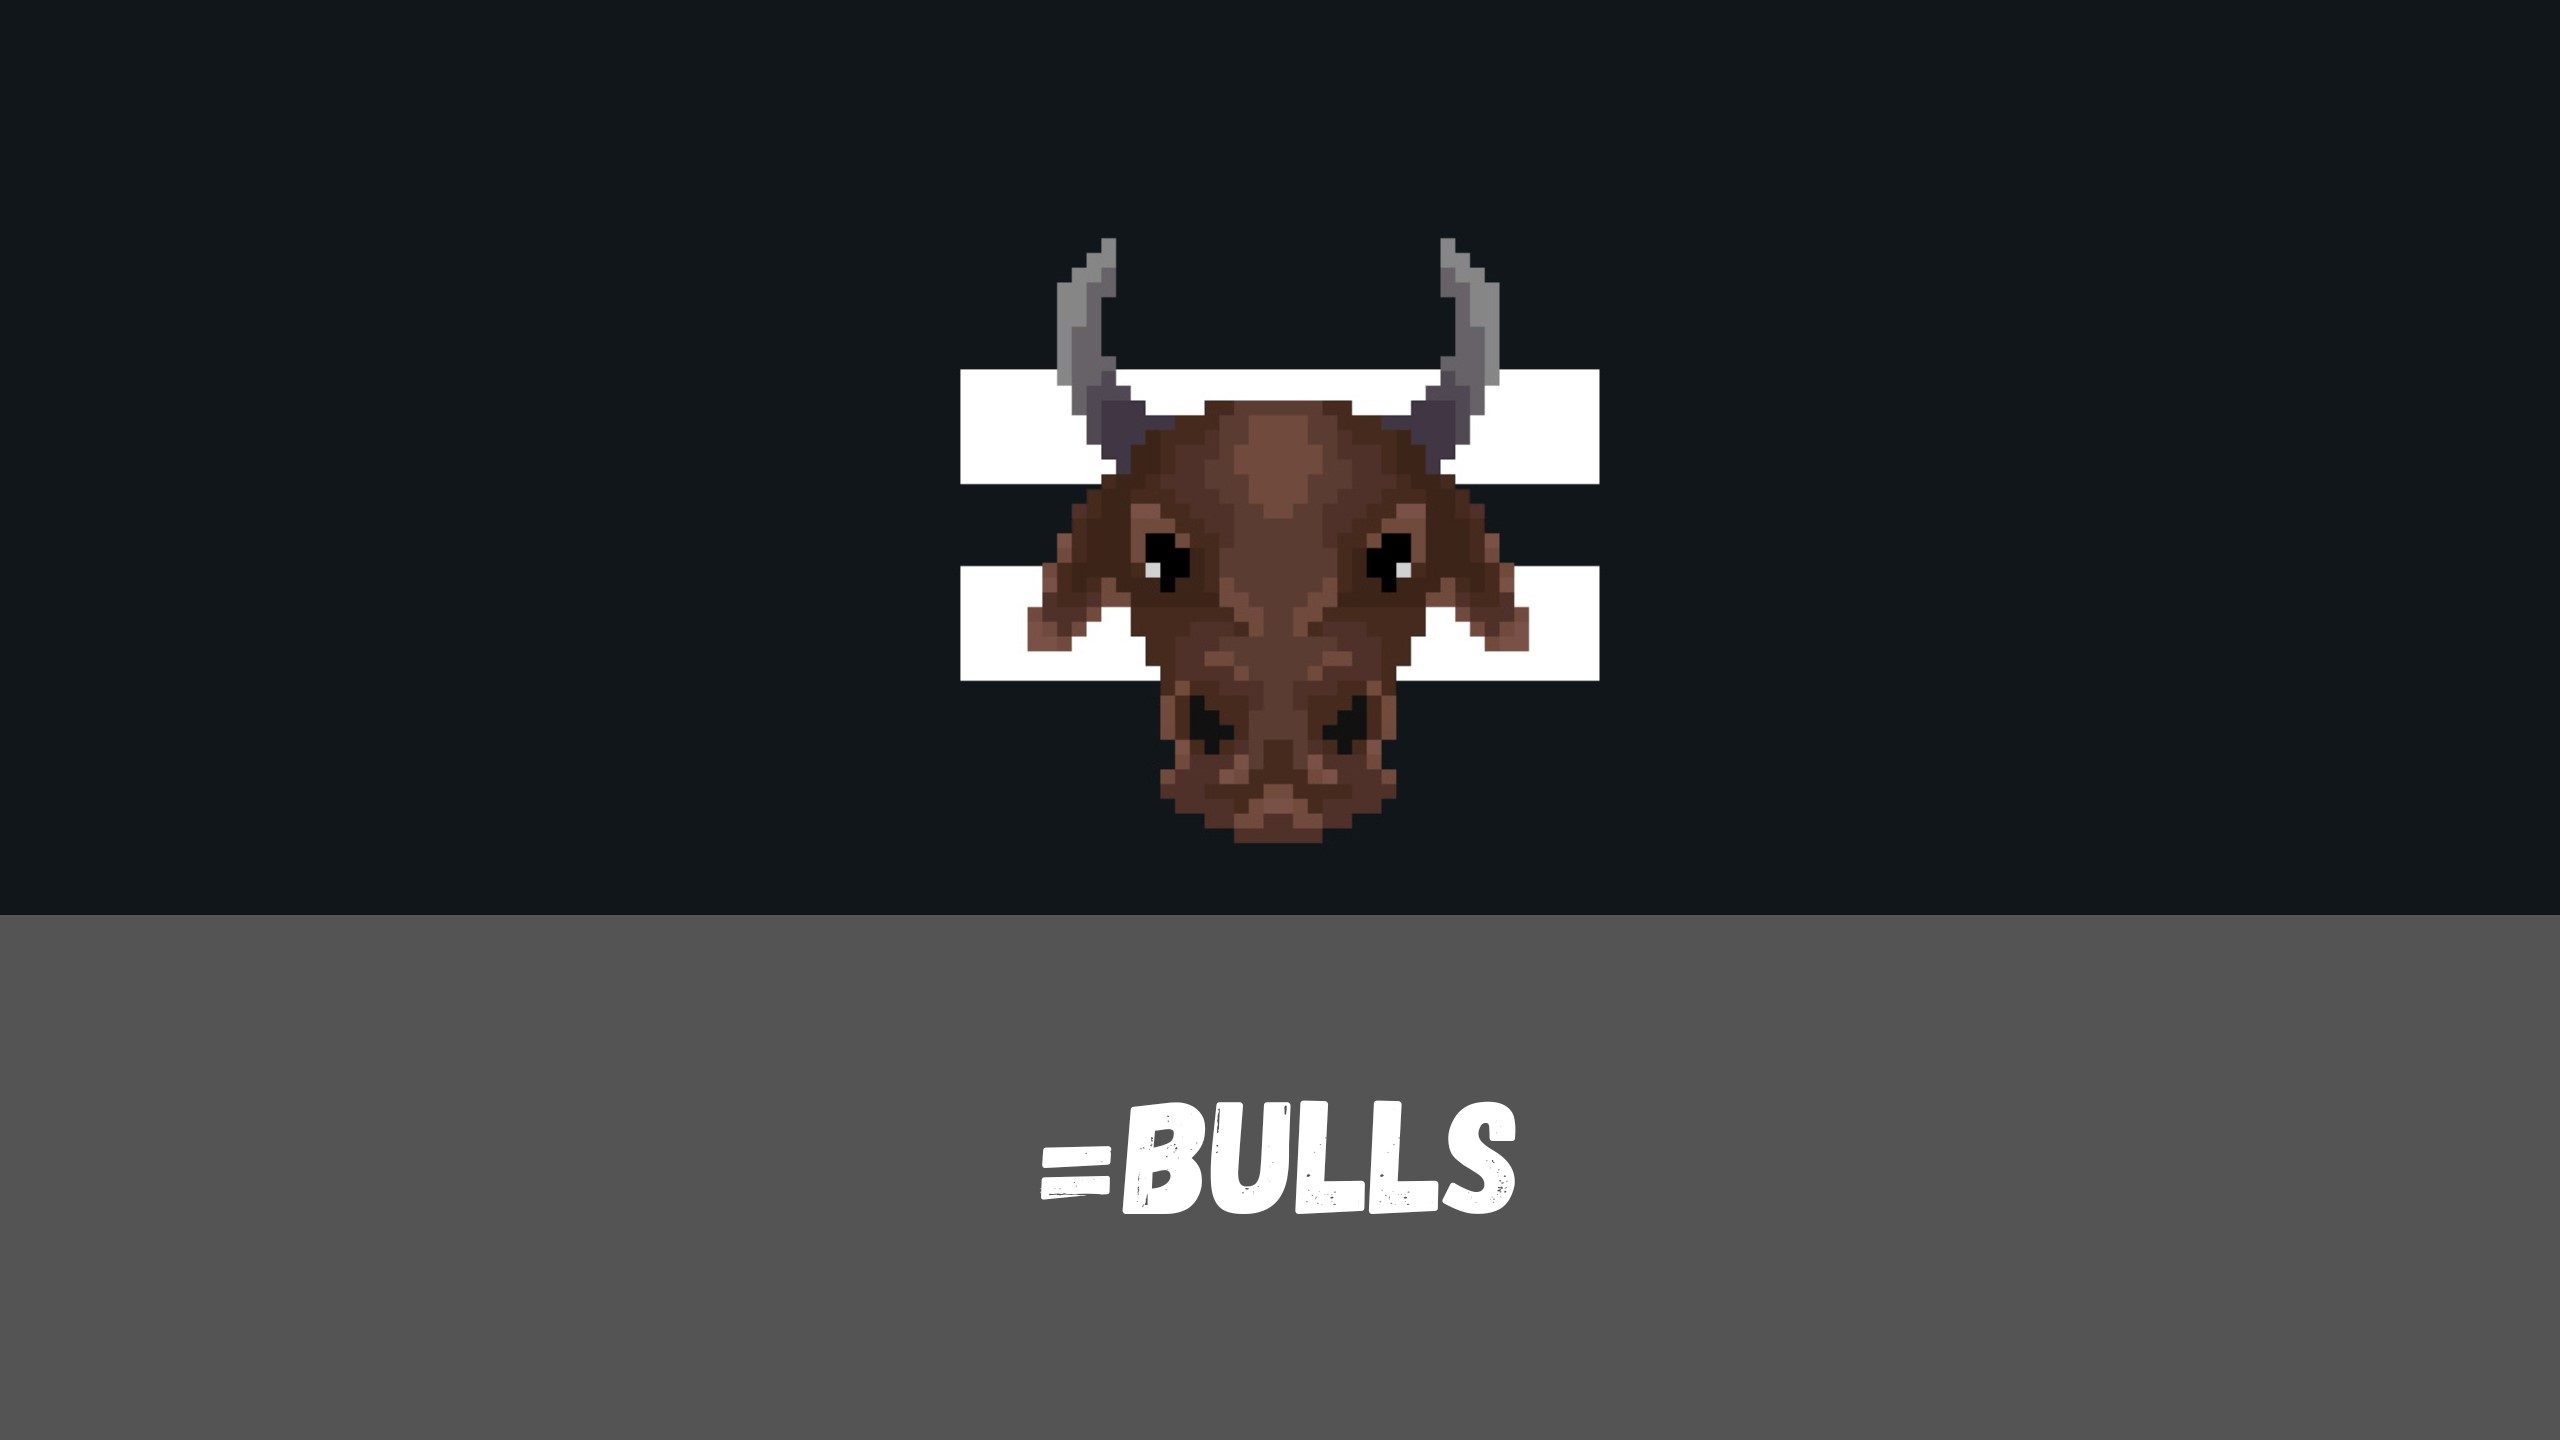 =Bulls